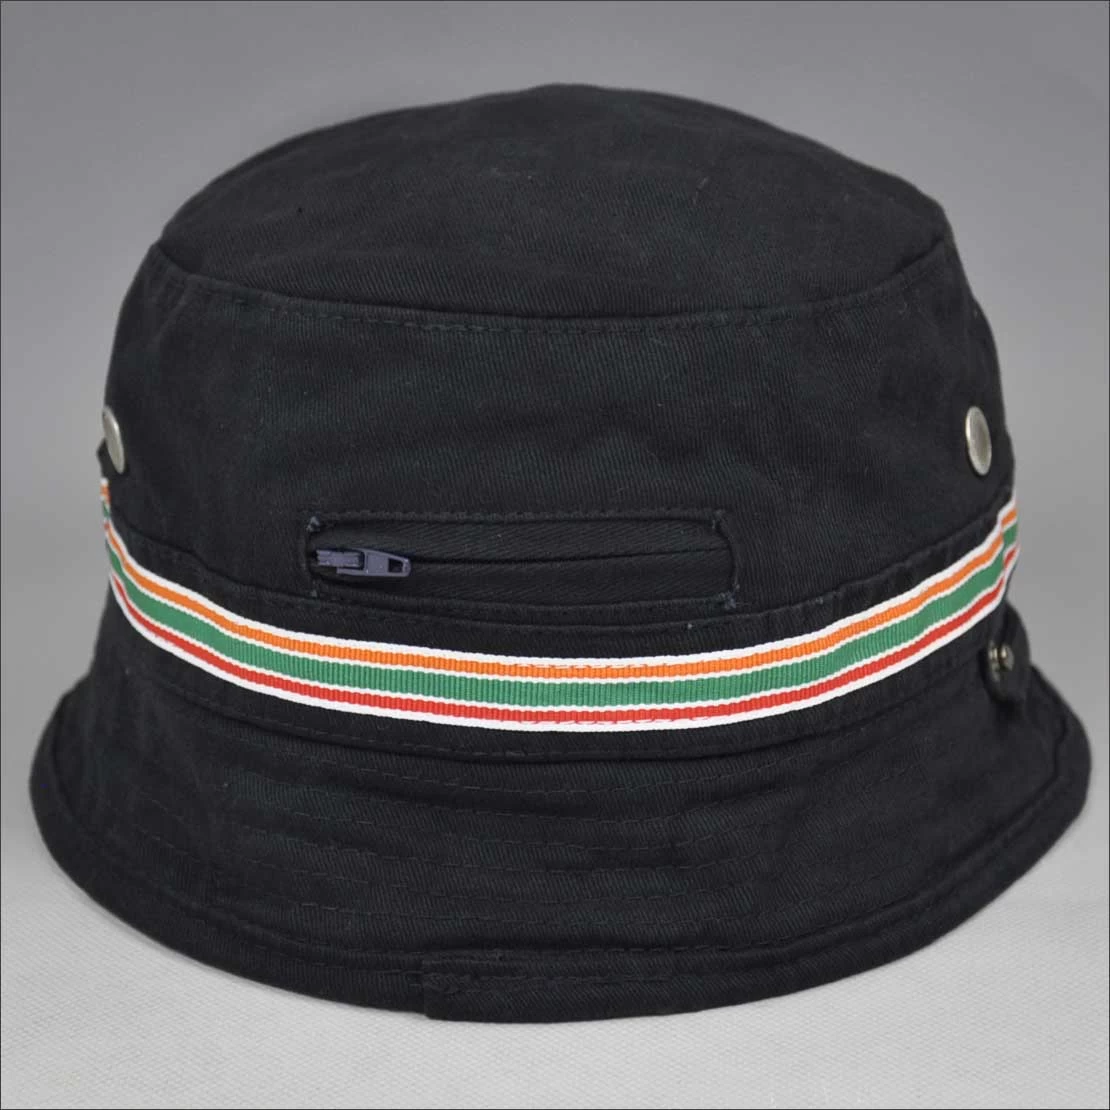 black bucket cap with zipper pocket